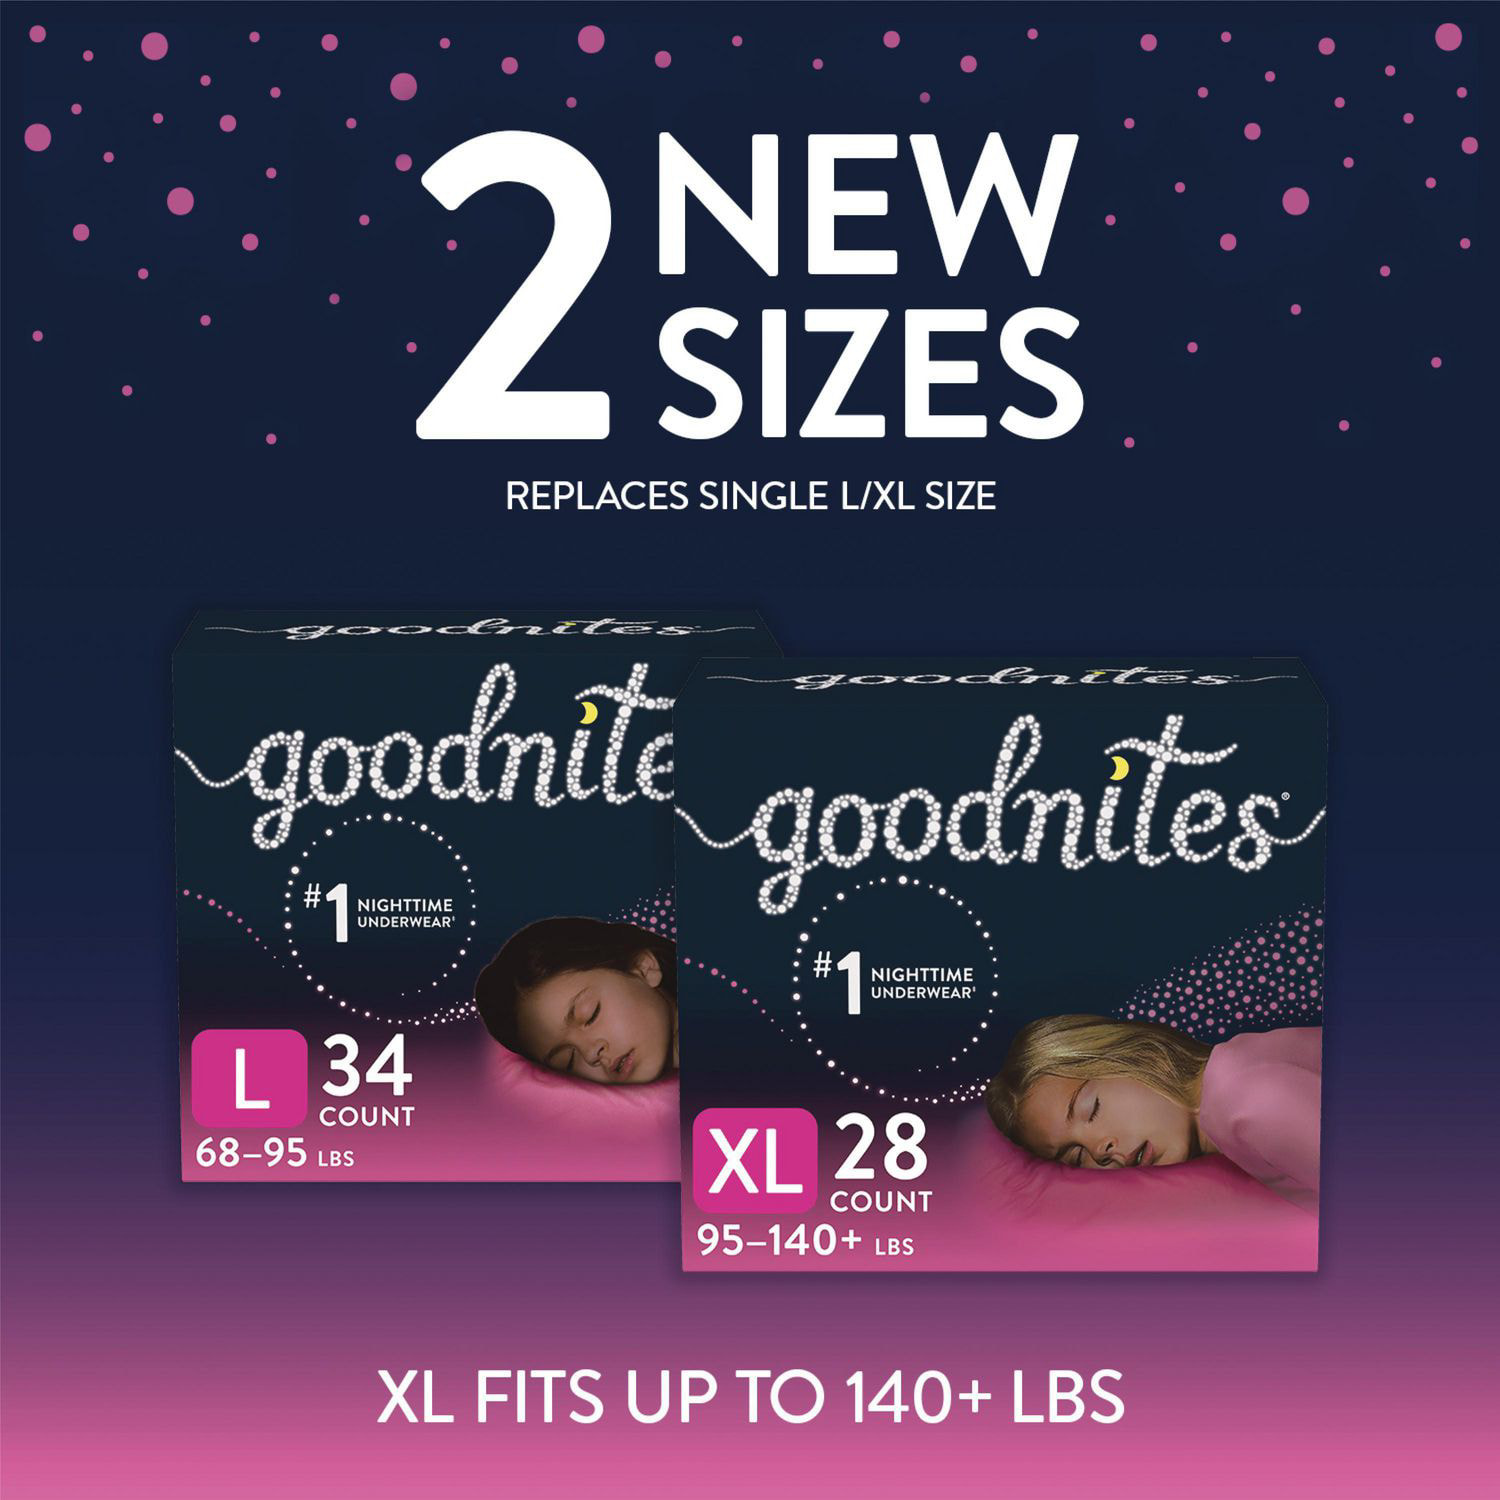 GoodNites Bedtime Underwear for Boys Size 8 - 14 India